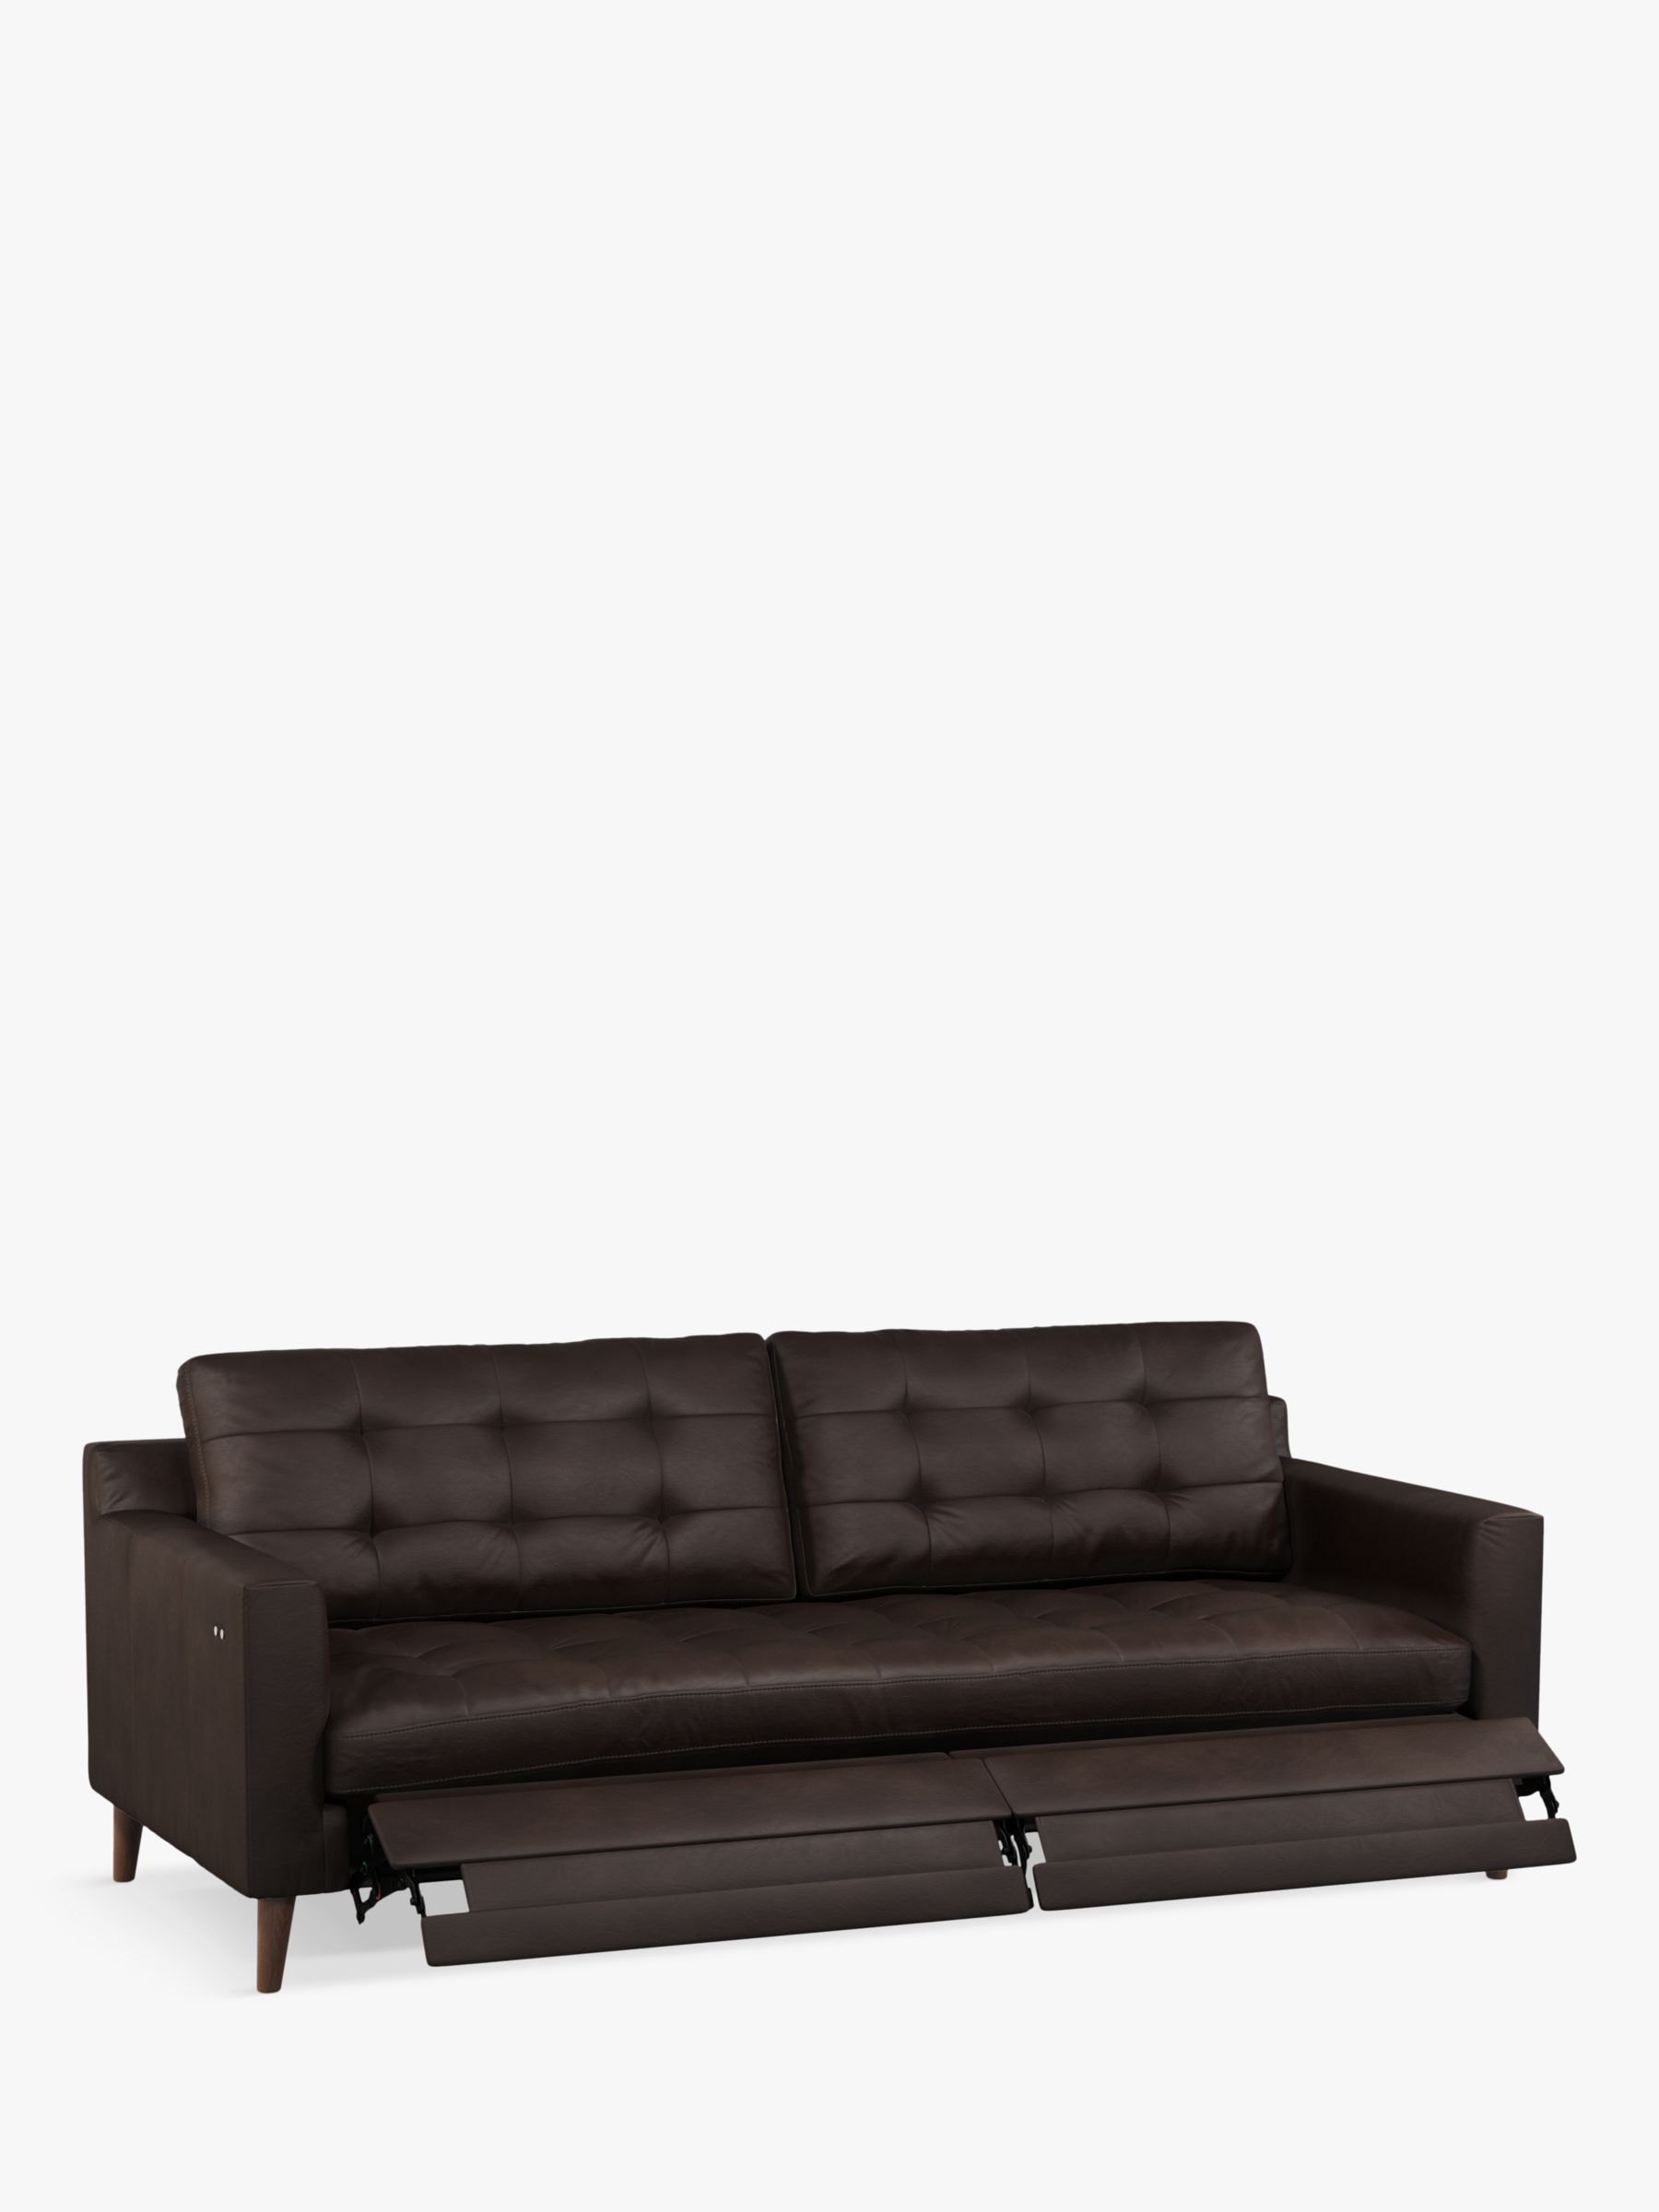 Draper Range, John Lewis Draper Motion Large 3 Seater Leather Sofa with Footrest Mechanism, Dark Leg, Demetra Charcoal